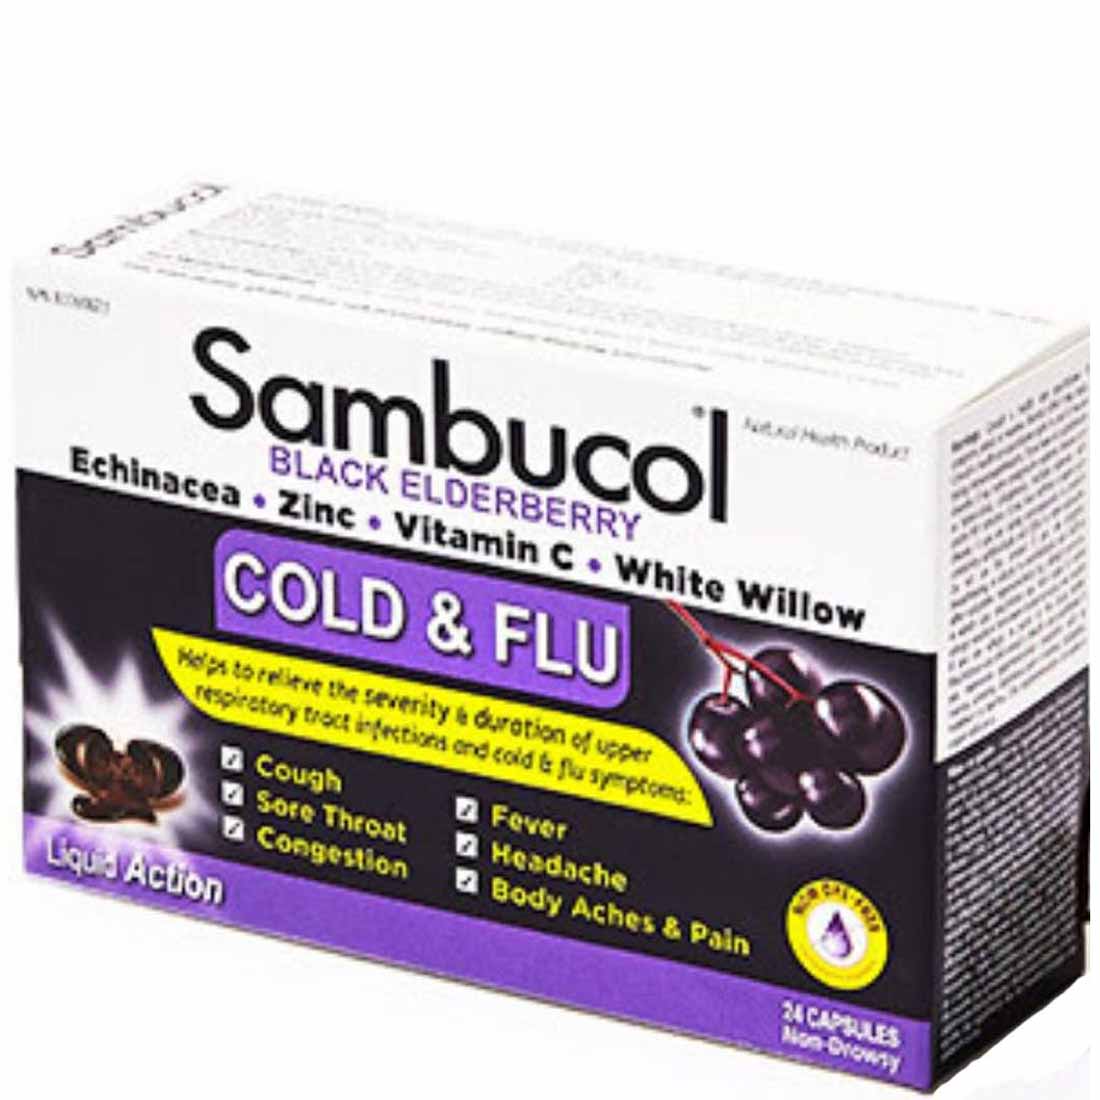 Sambucol Cold & Flu Capsules (Elderberry, Echinacea, Zinc & Vitamin C), 24 Capsules